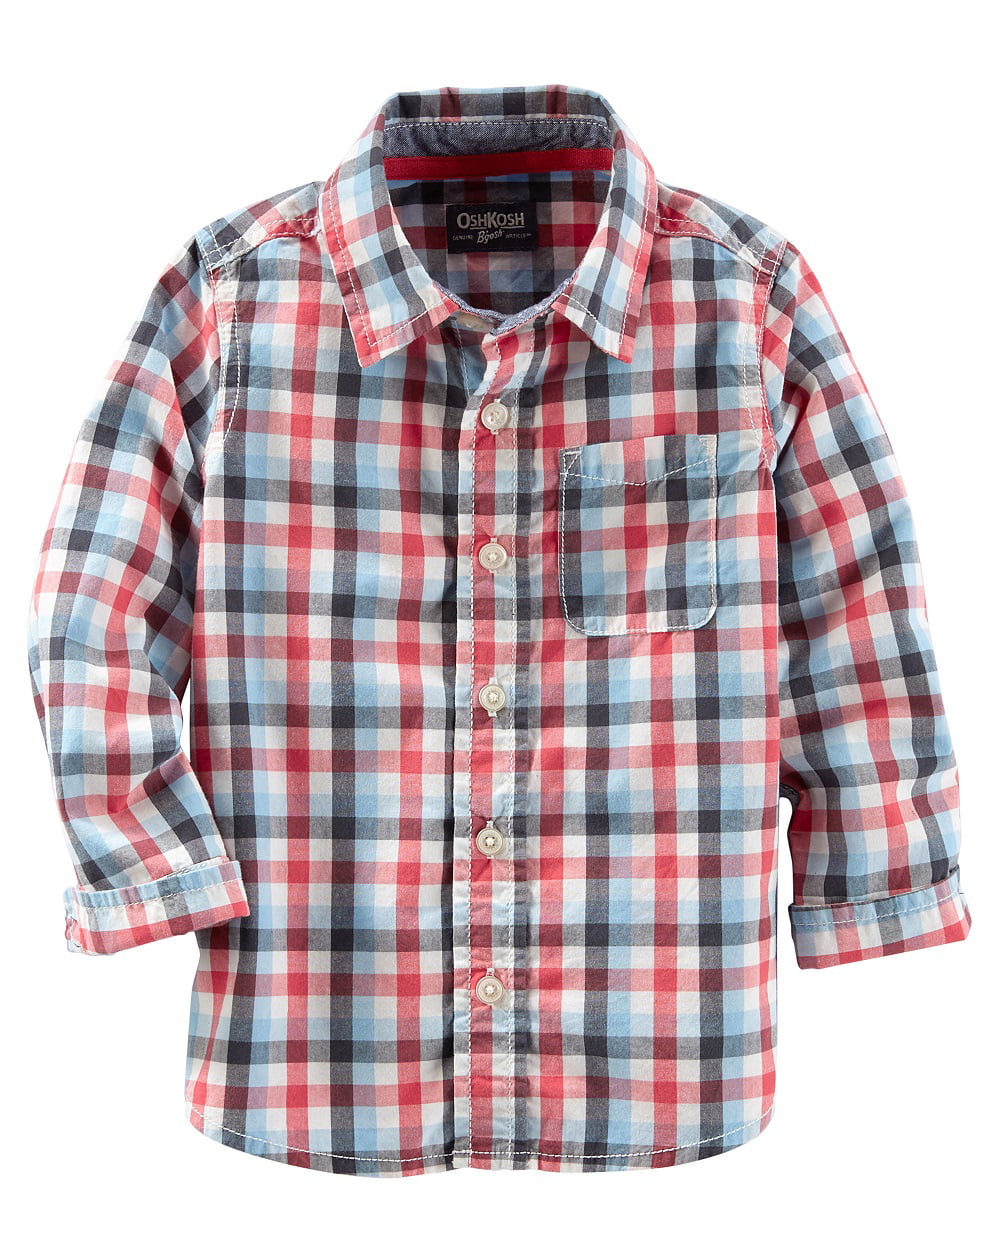 Details about   Boys Oshkosh 100% Cotton Dress Shirt Size 4T 